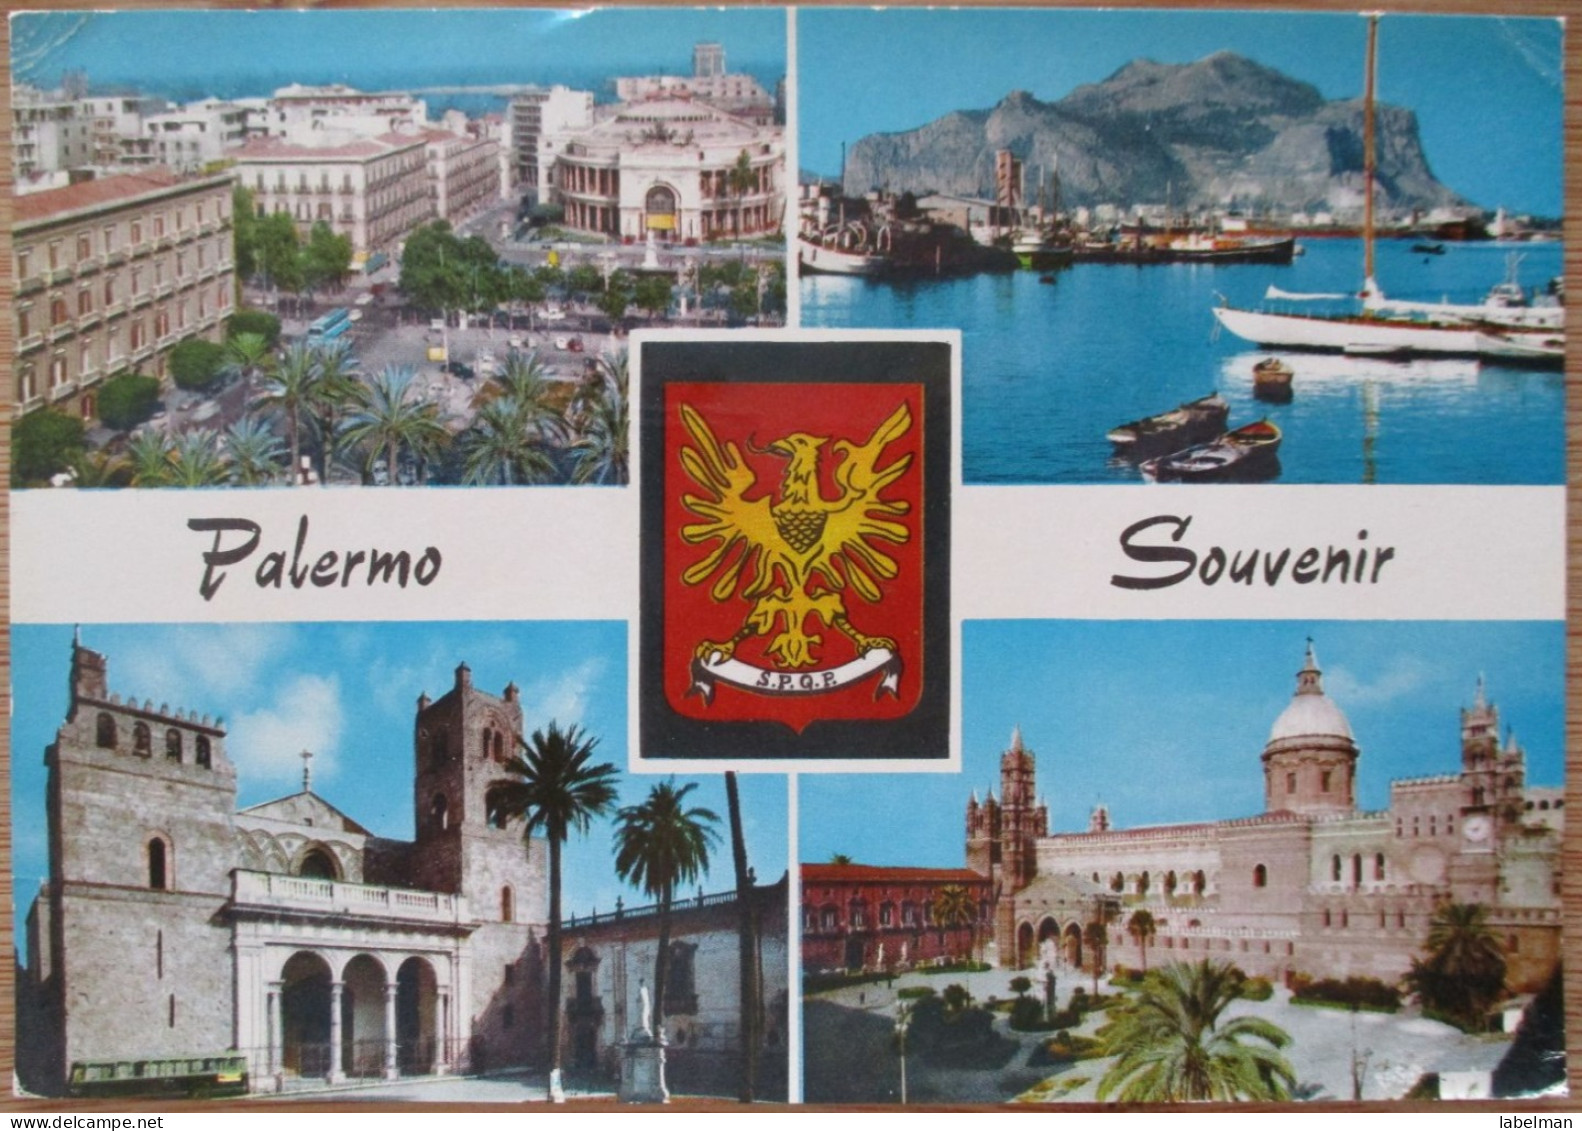 ITALIA ITALY PALERMOMULTI VIEW PANORAMA POSTCARD CARTE POSTALE ANSICHTSKARTE CARTOLINA POSTKARTE CARD KARTE - Palermo